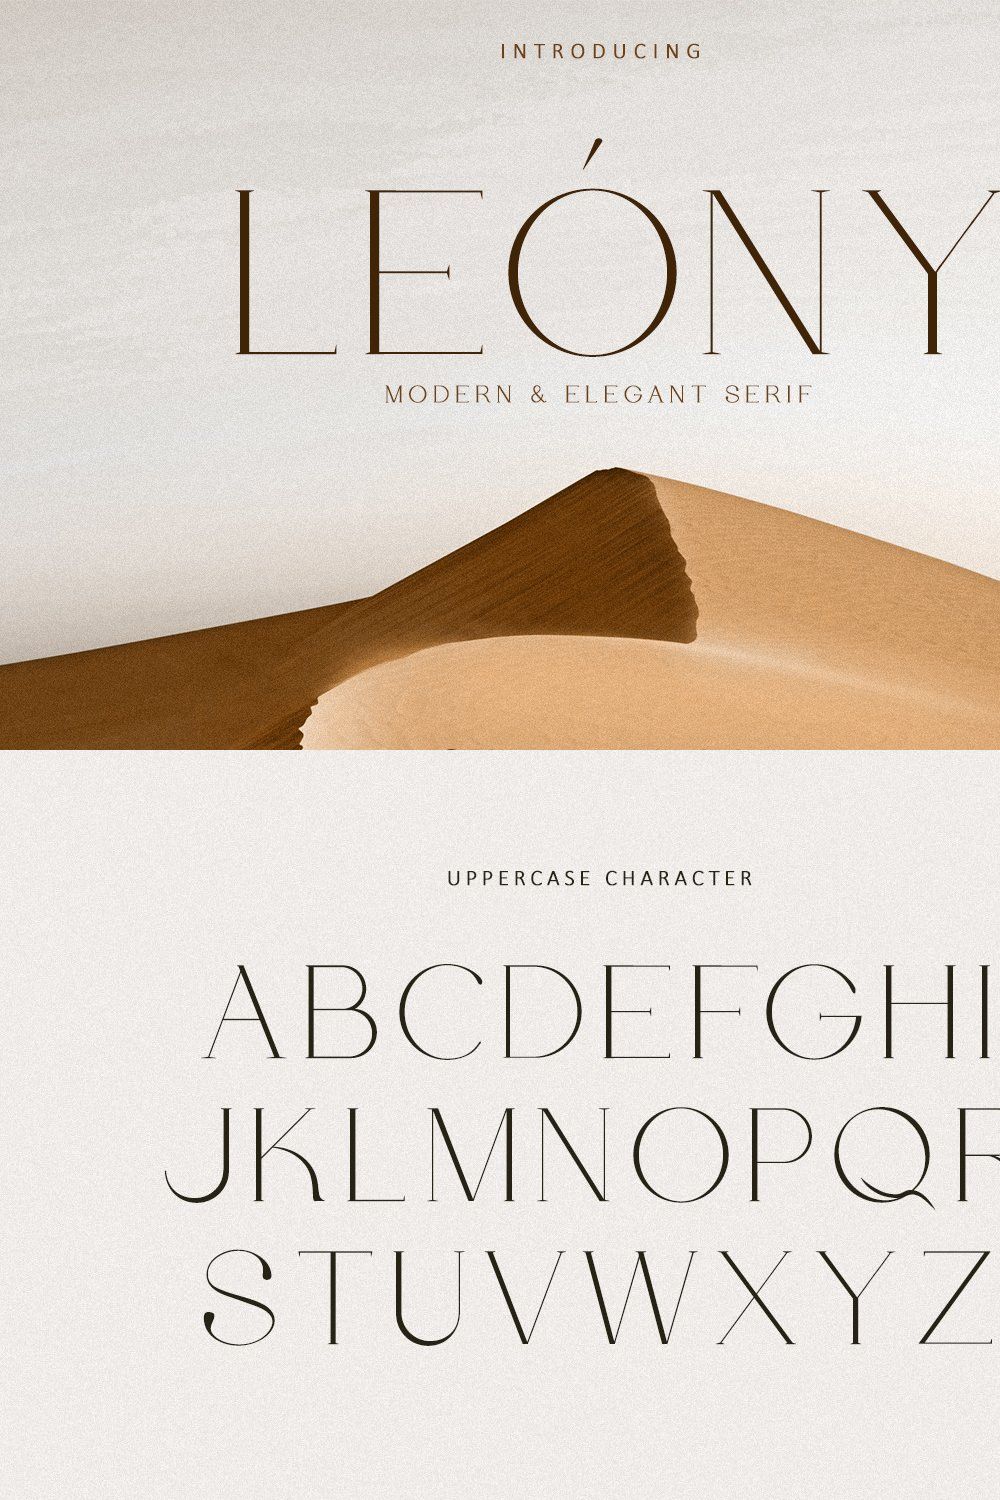 Leony - Elegant Serif pinterest preview image.